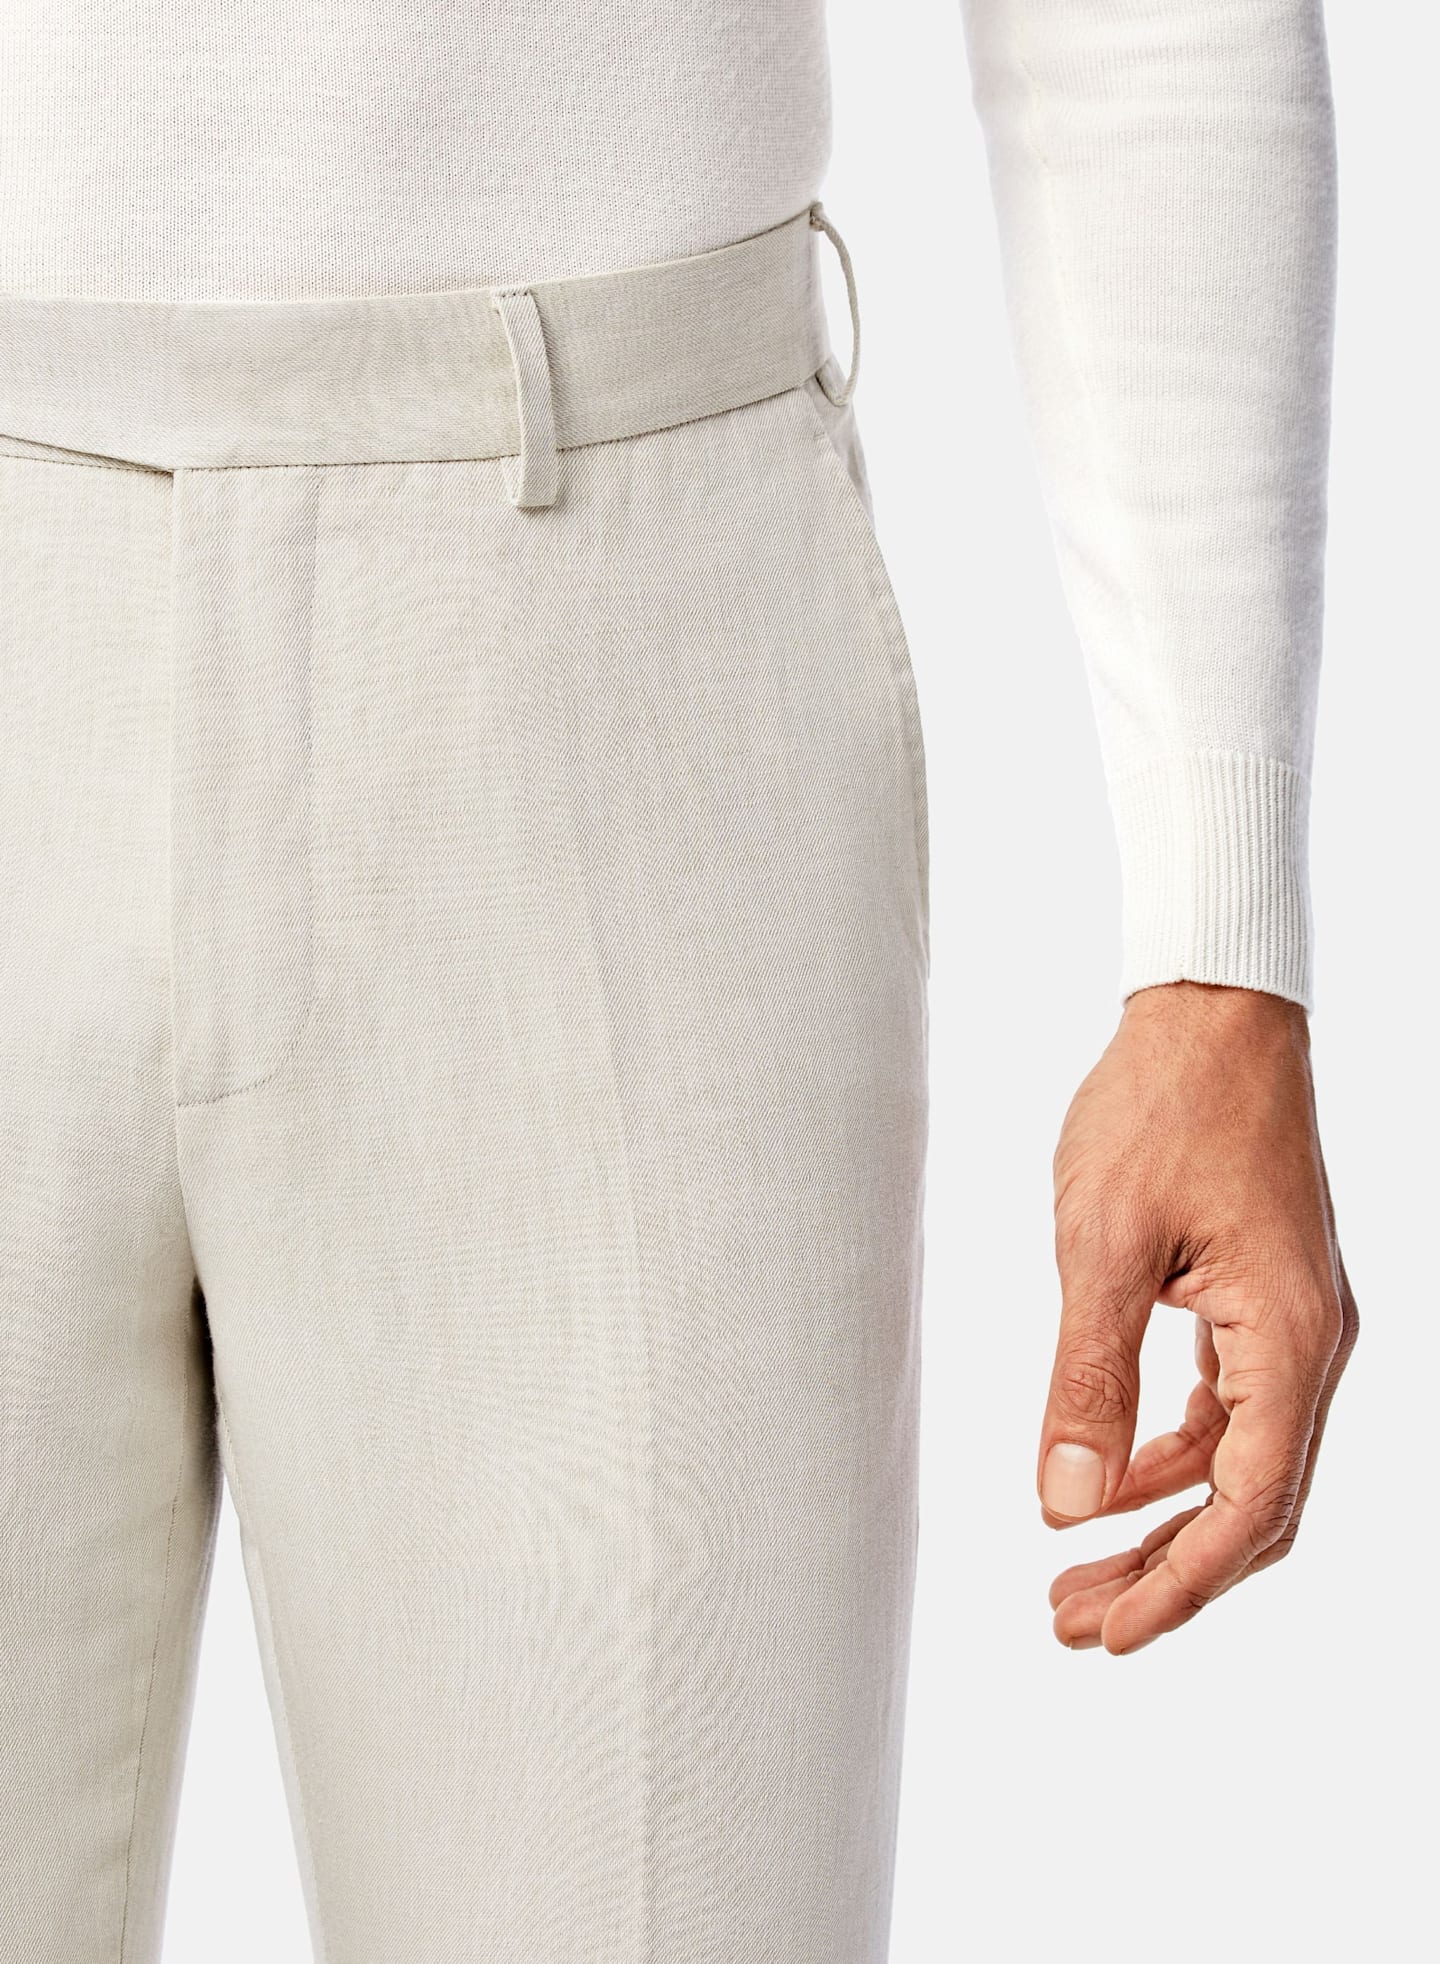 Flat front off-white linen pants